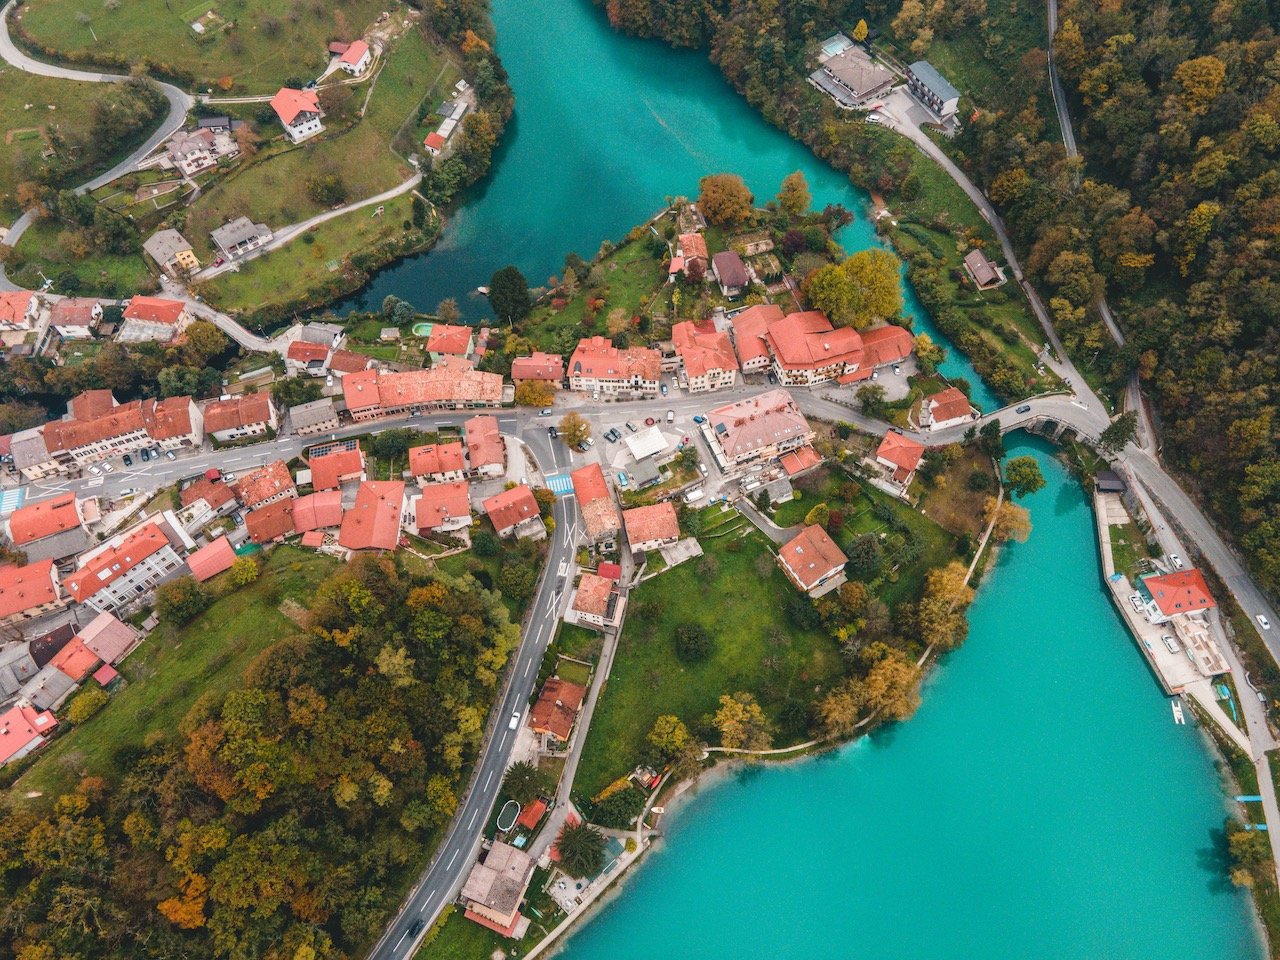   Most Na Soci, Slovenia (ISO 100, 4.5 mm,  f /2.8, 1/40 s)  